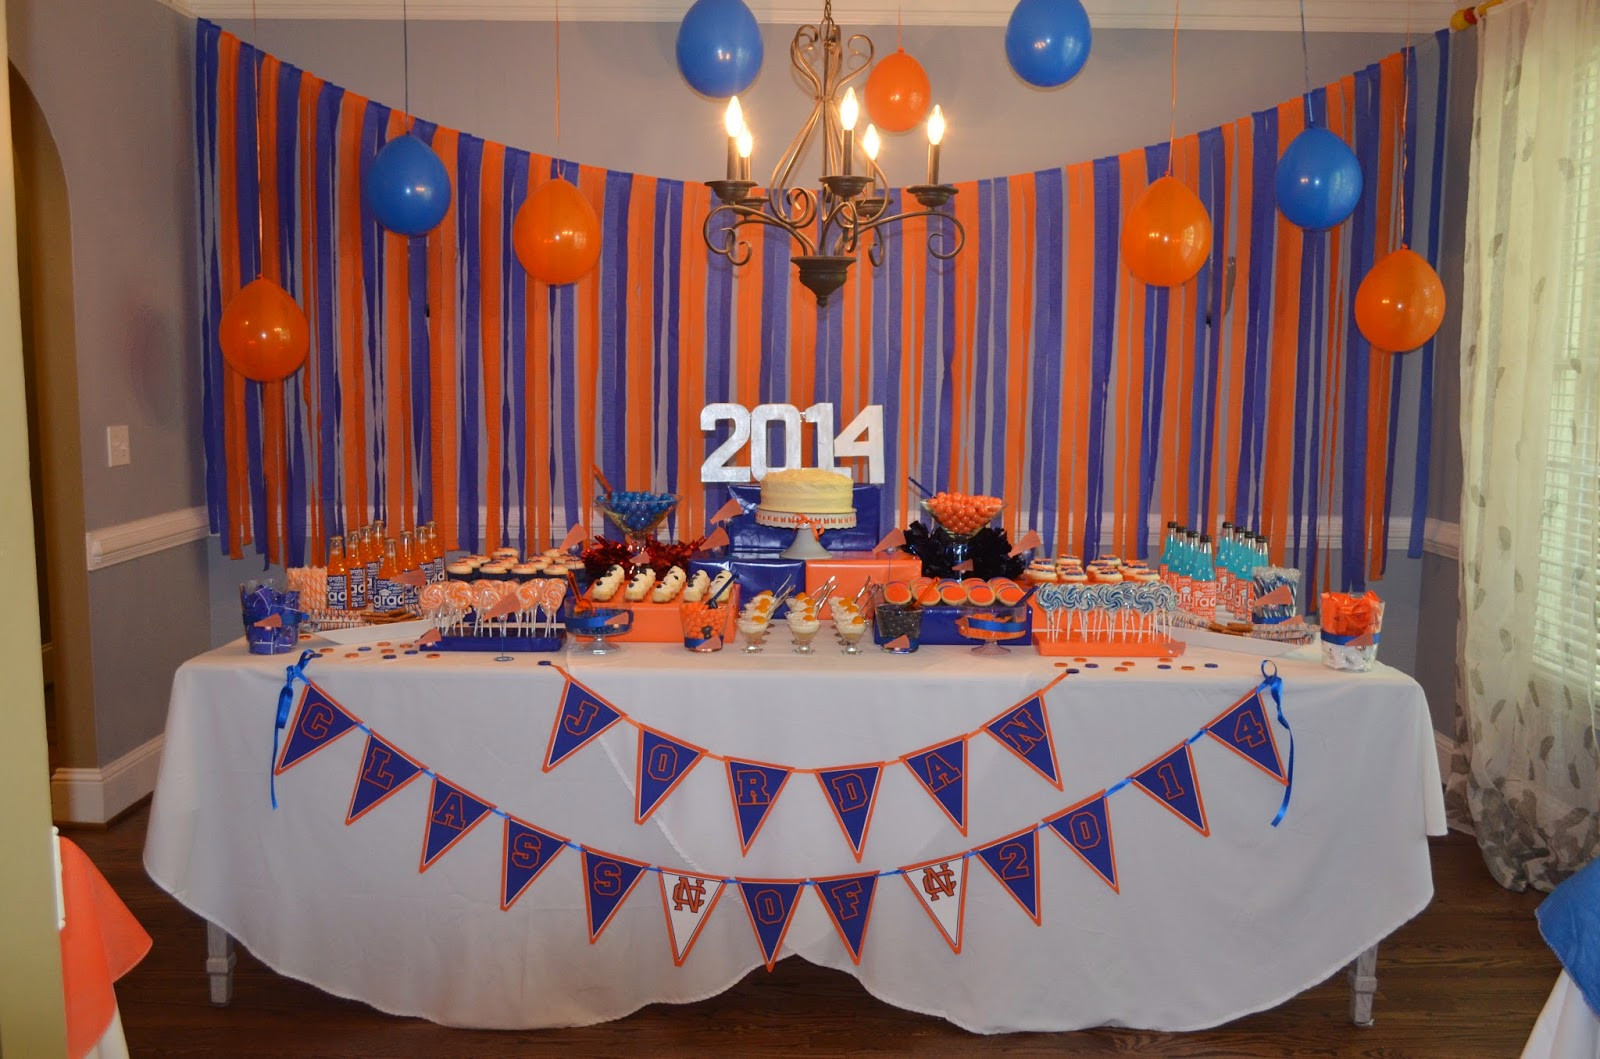 High School Graduation Ideas Party
 Cakegirl s Kitchen Blue and Orange Graduation Party